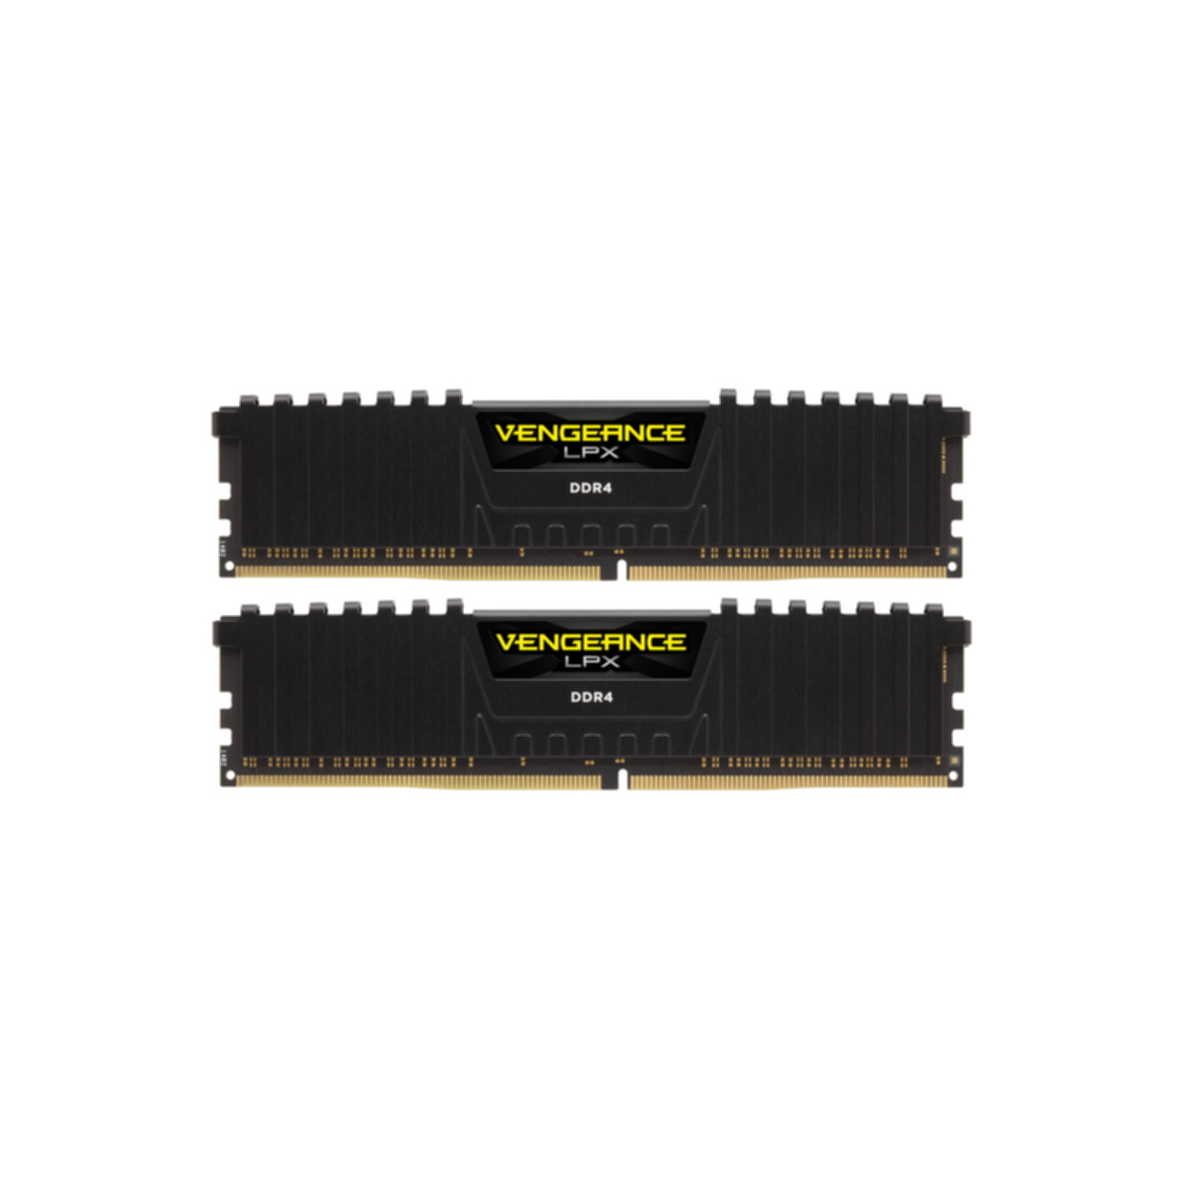 CORSAIR CMK16GX4M2B3000C15 GB Arbeitsspeicher 16 DDR4